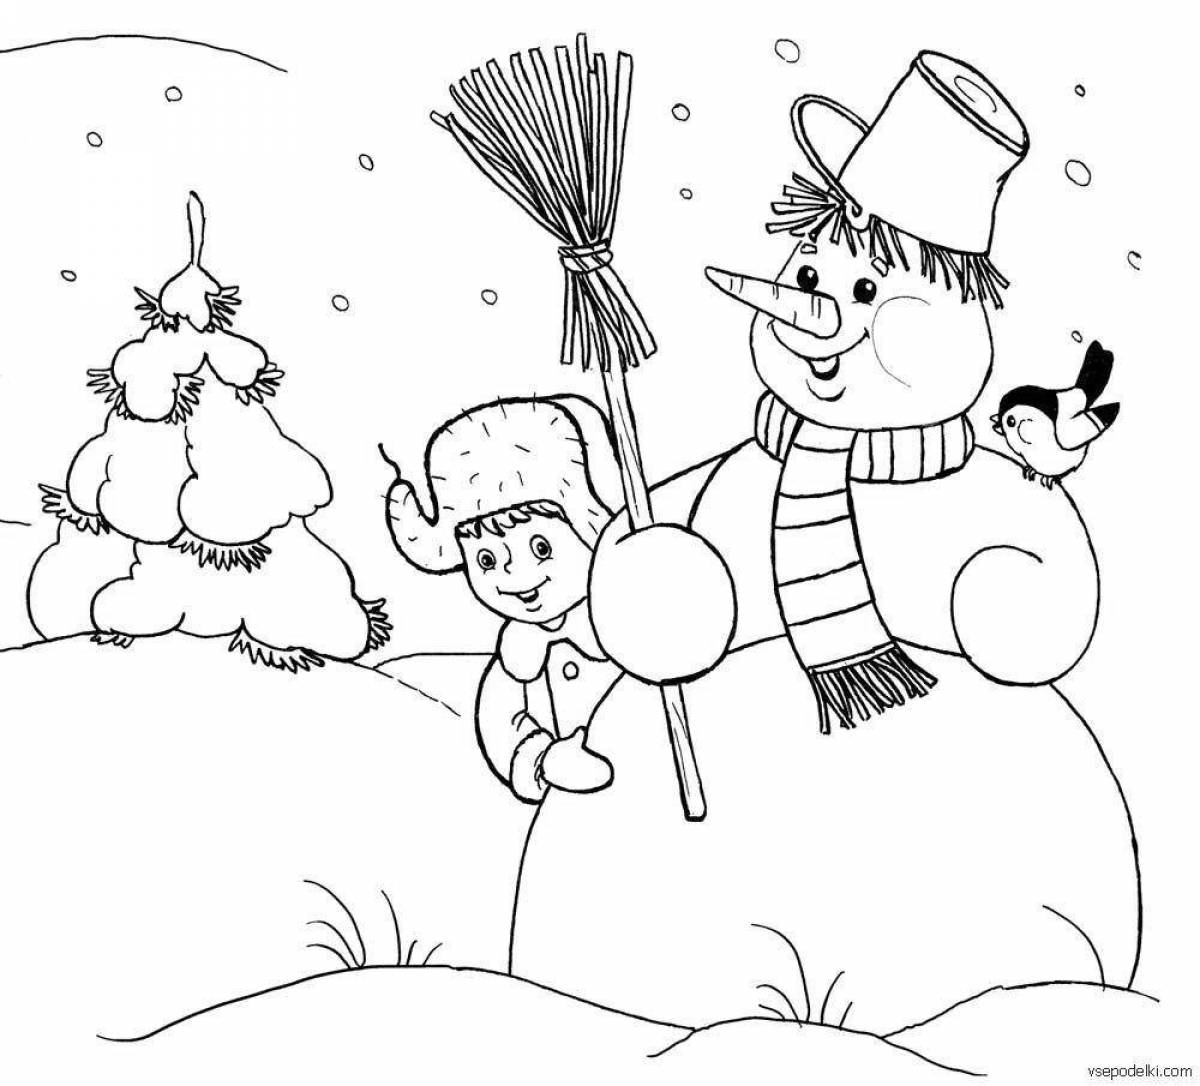 Joyful snowman coloring for kids 5 6